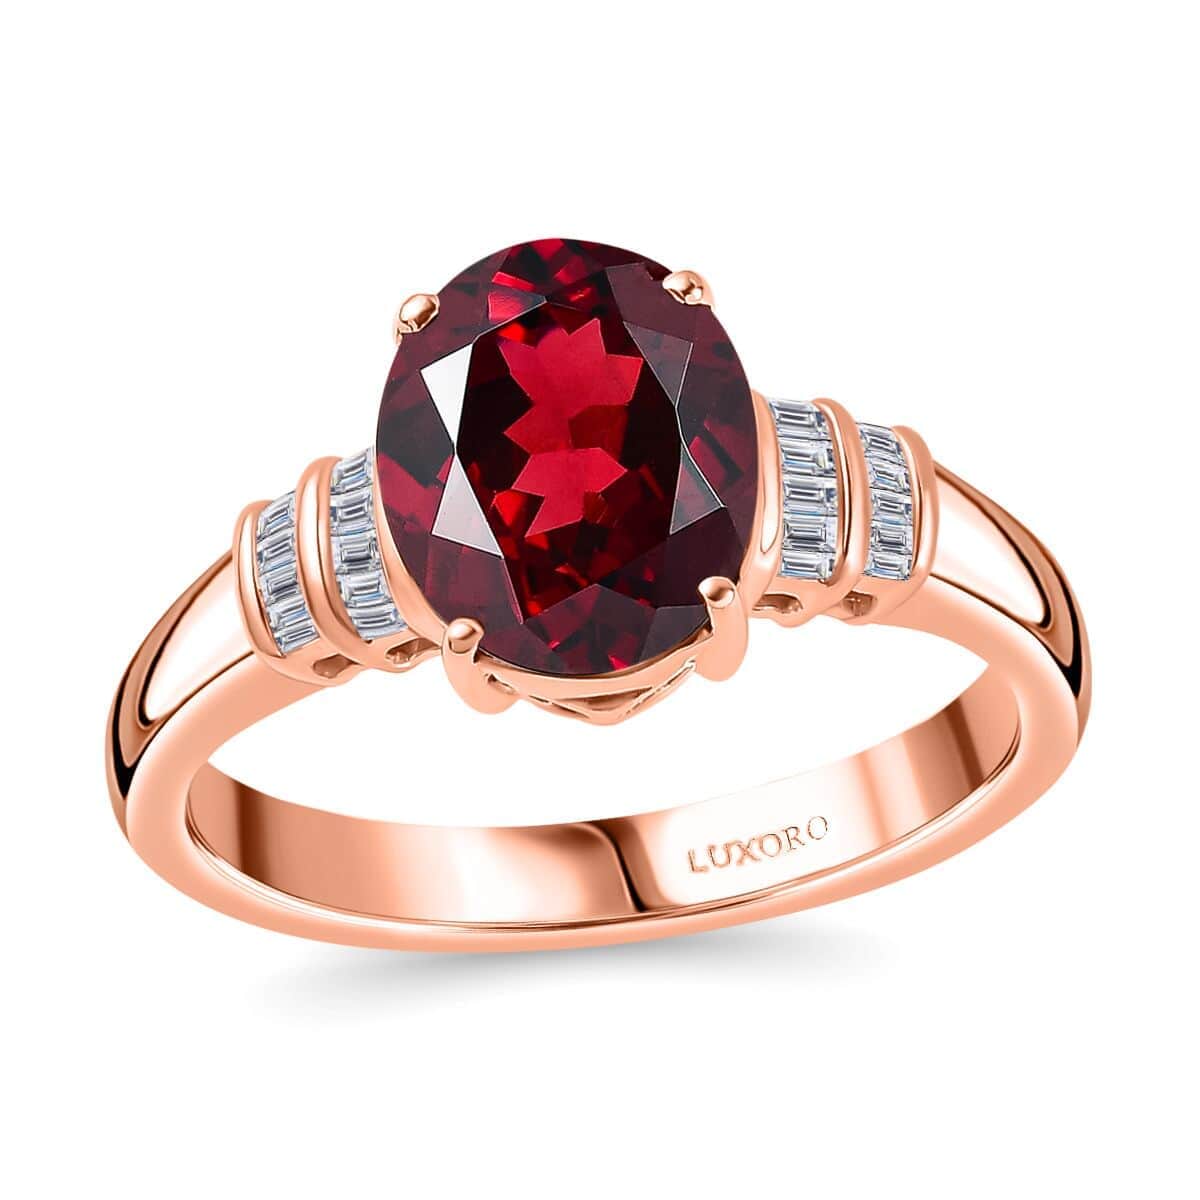 Luxoro 10K Rose Gold Premium Orissa Rhodolite Garnet and G-H I2 Diamond Ring (Size 6.0) 3.10 ctw image number 0